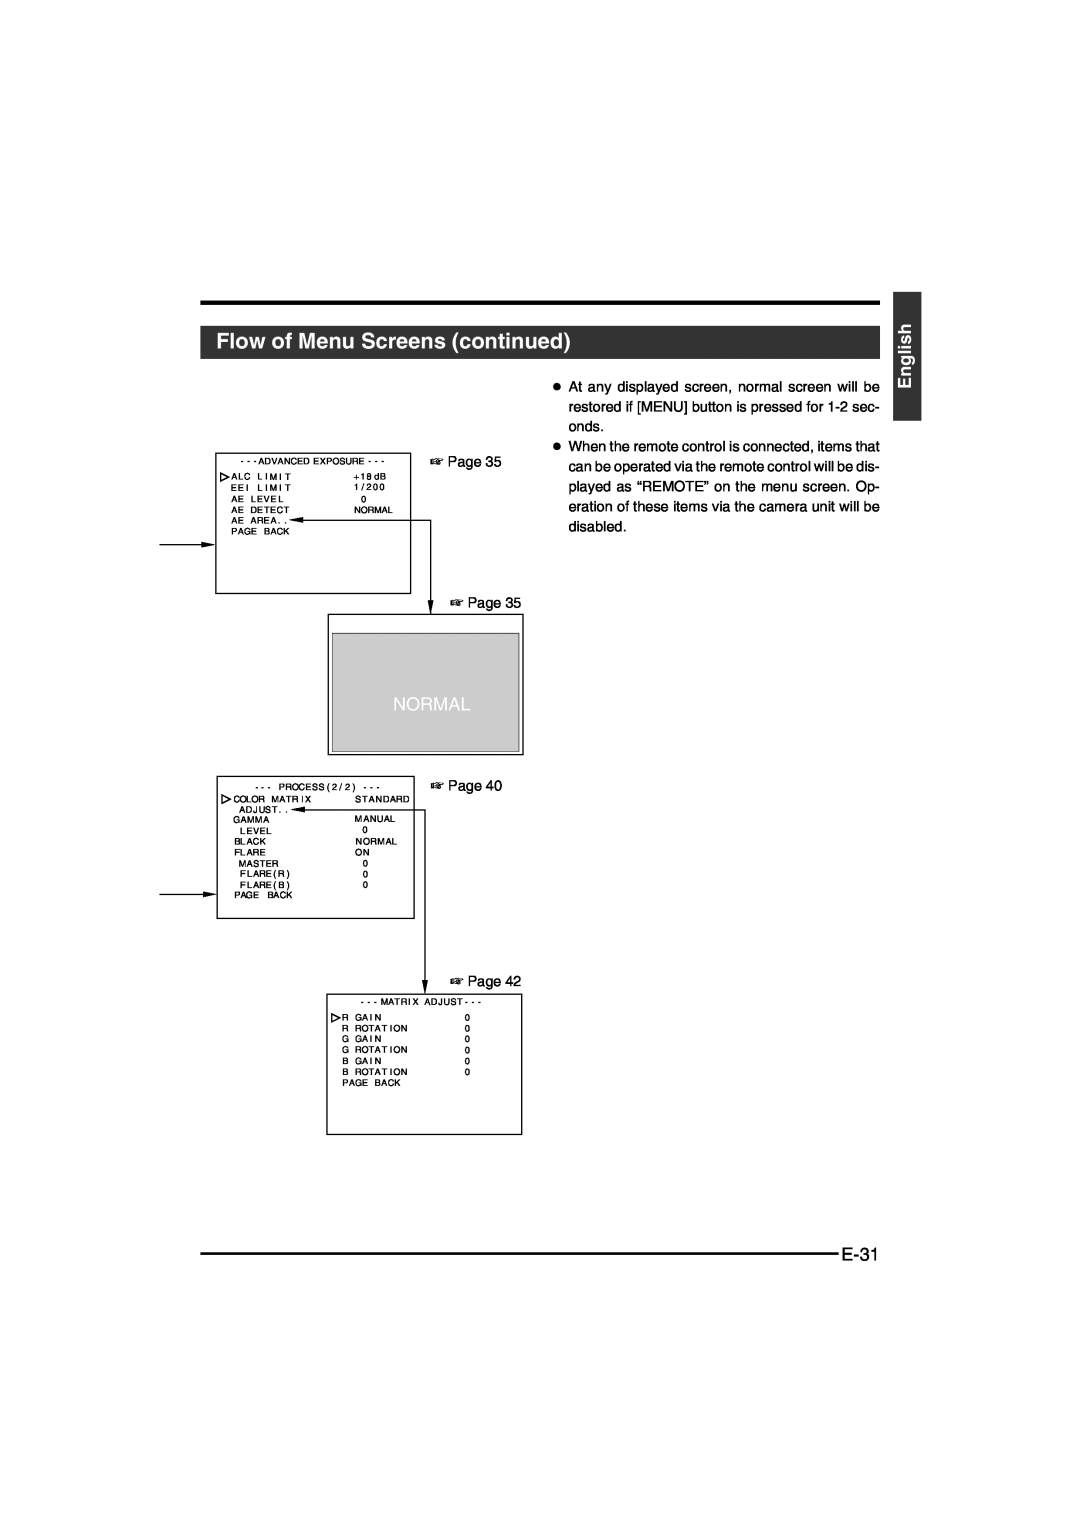 JVC KY-F550E instruction manual Flow of Menu Screens continued, Normal, E-31, English 